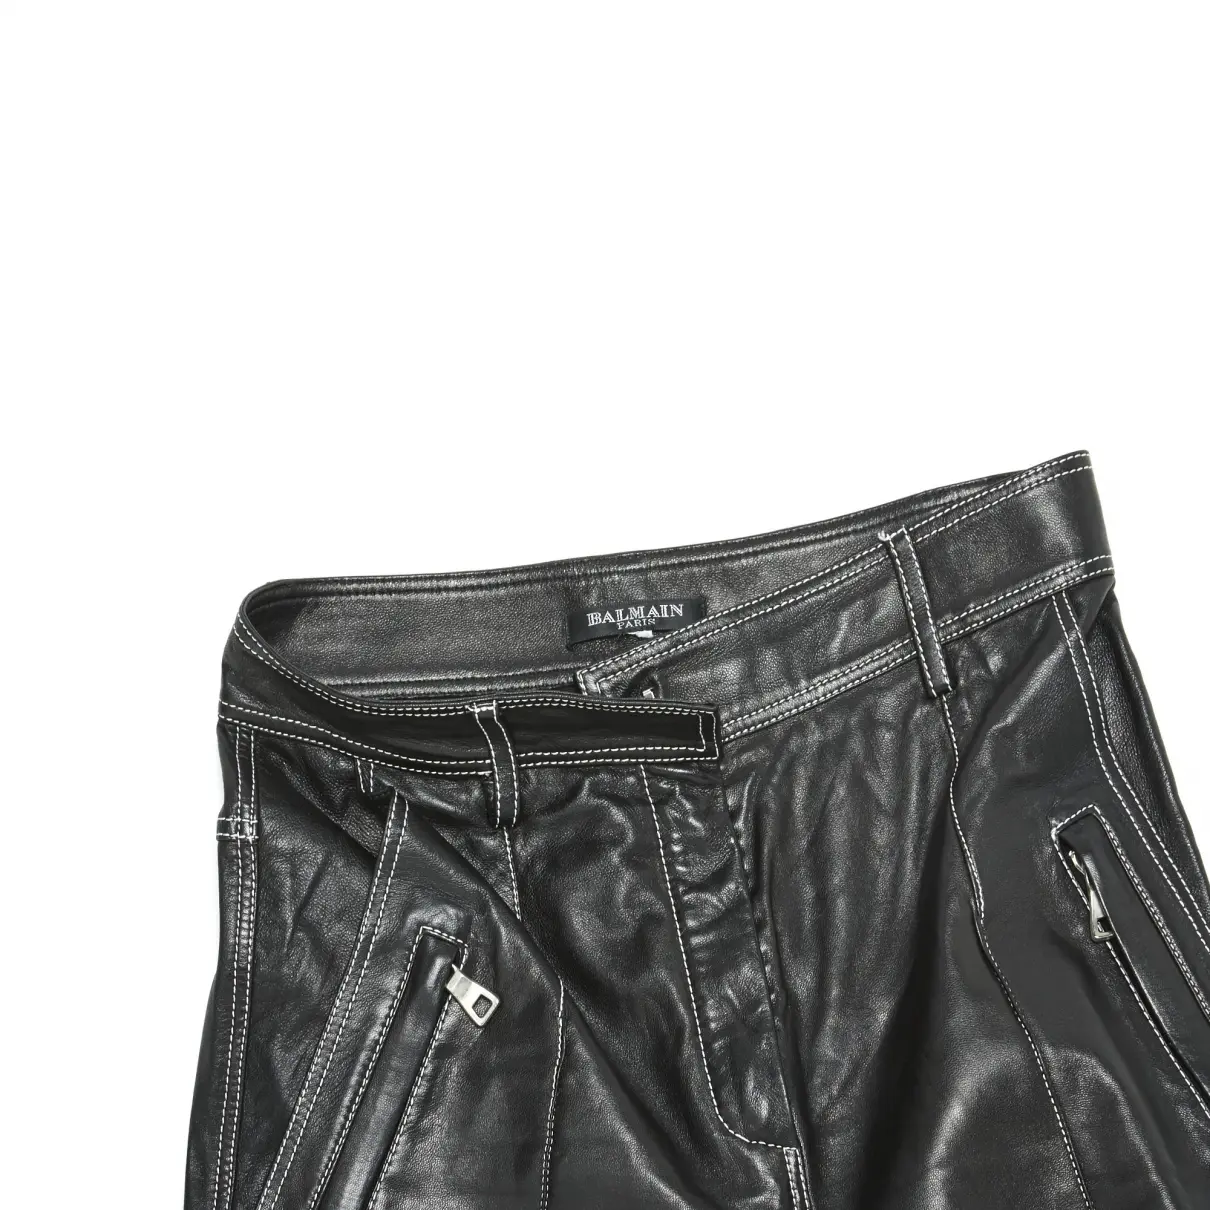 Buy Balmain Leather mini short online